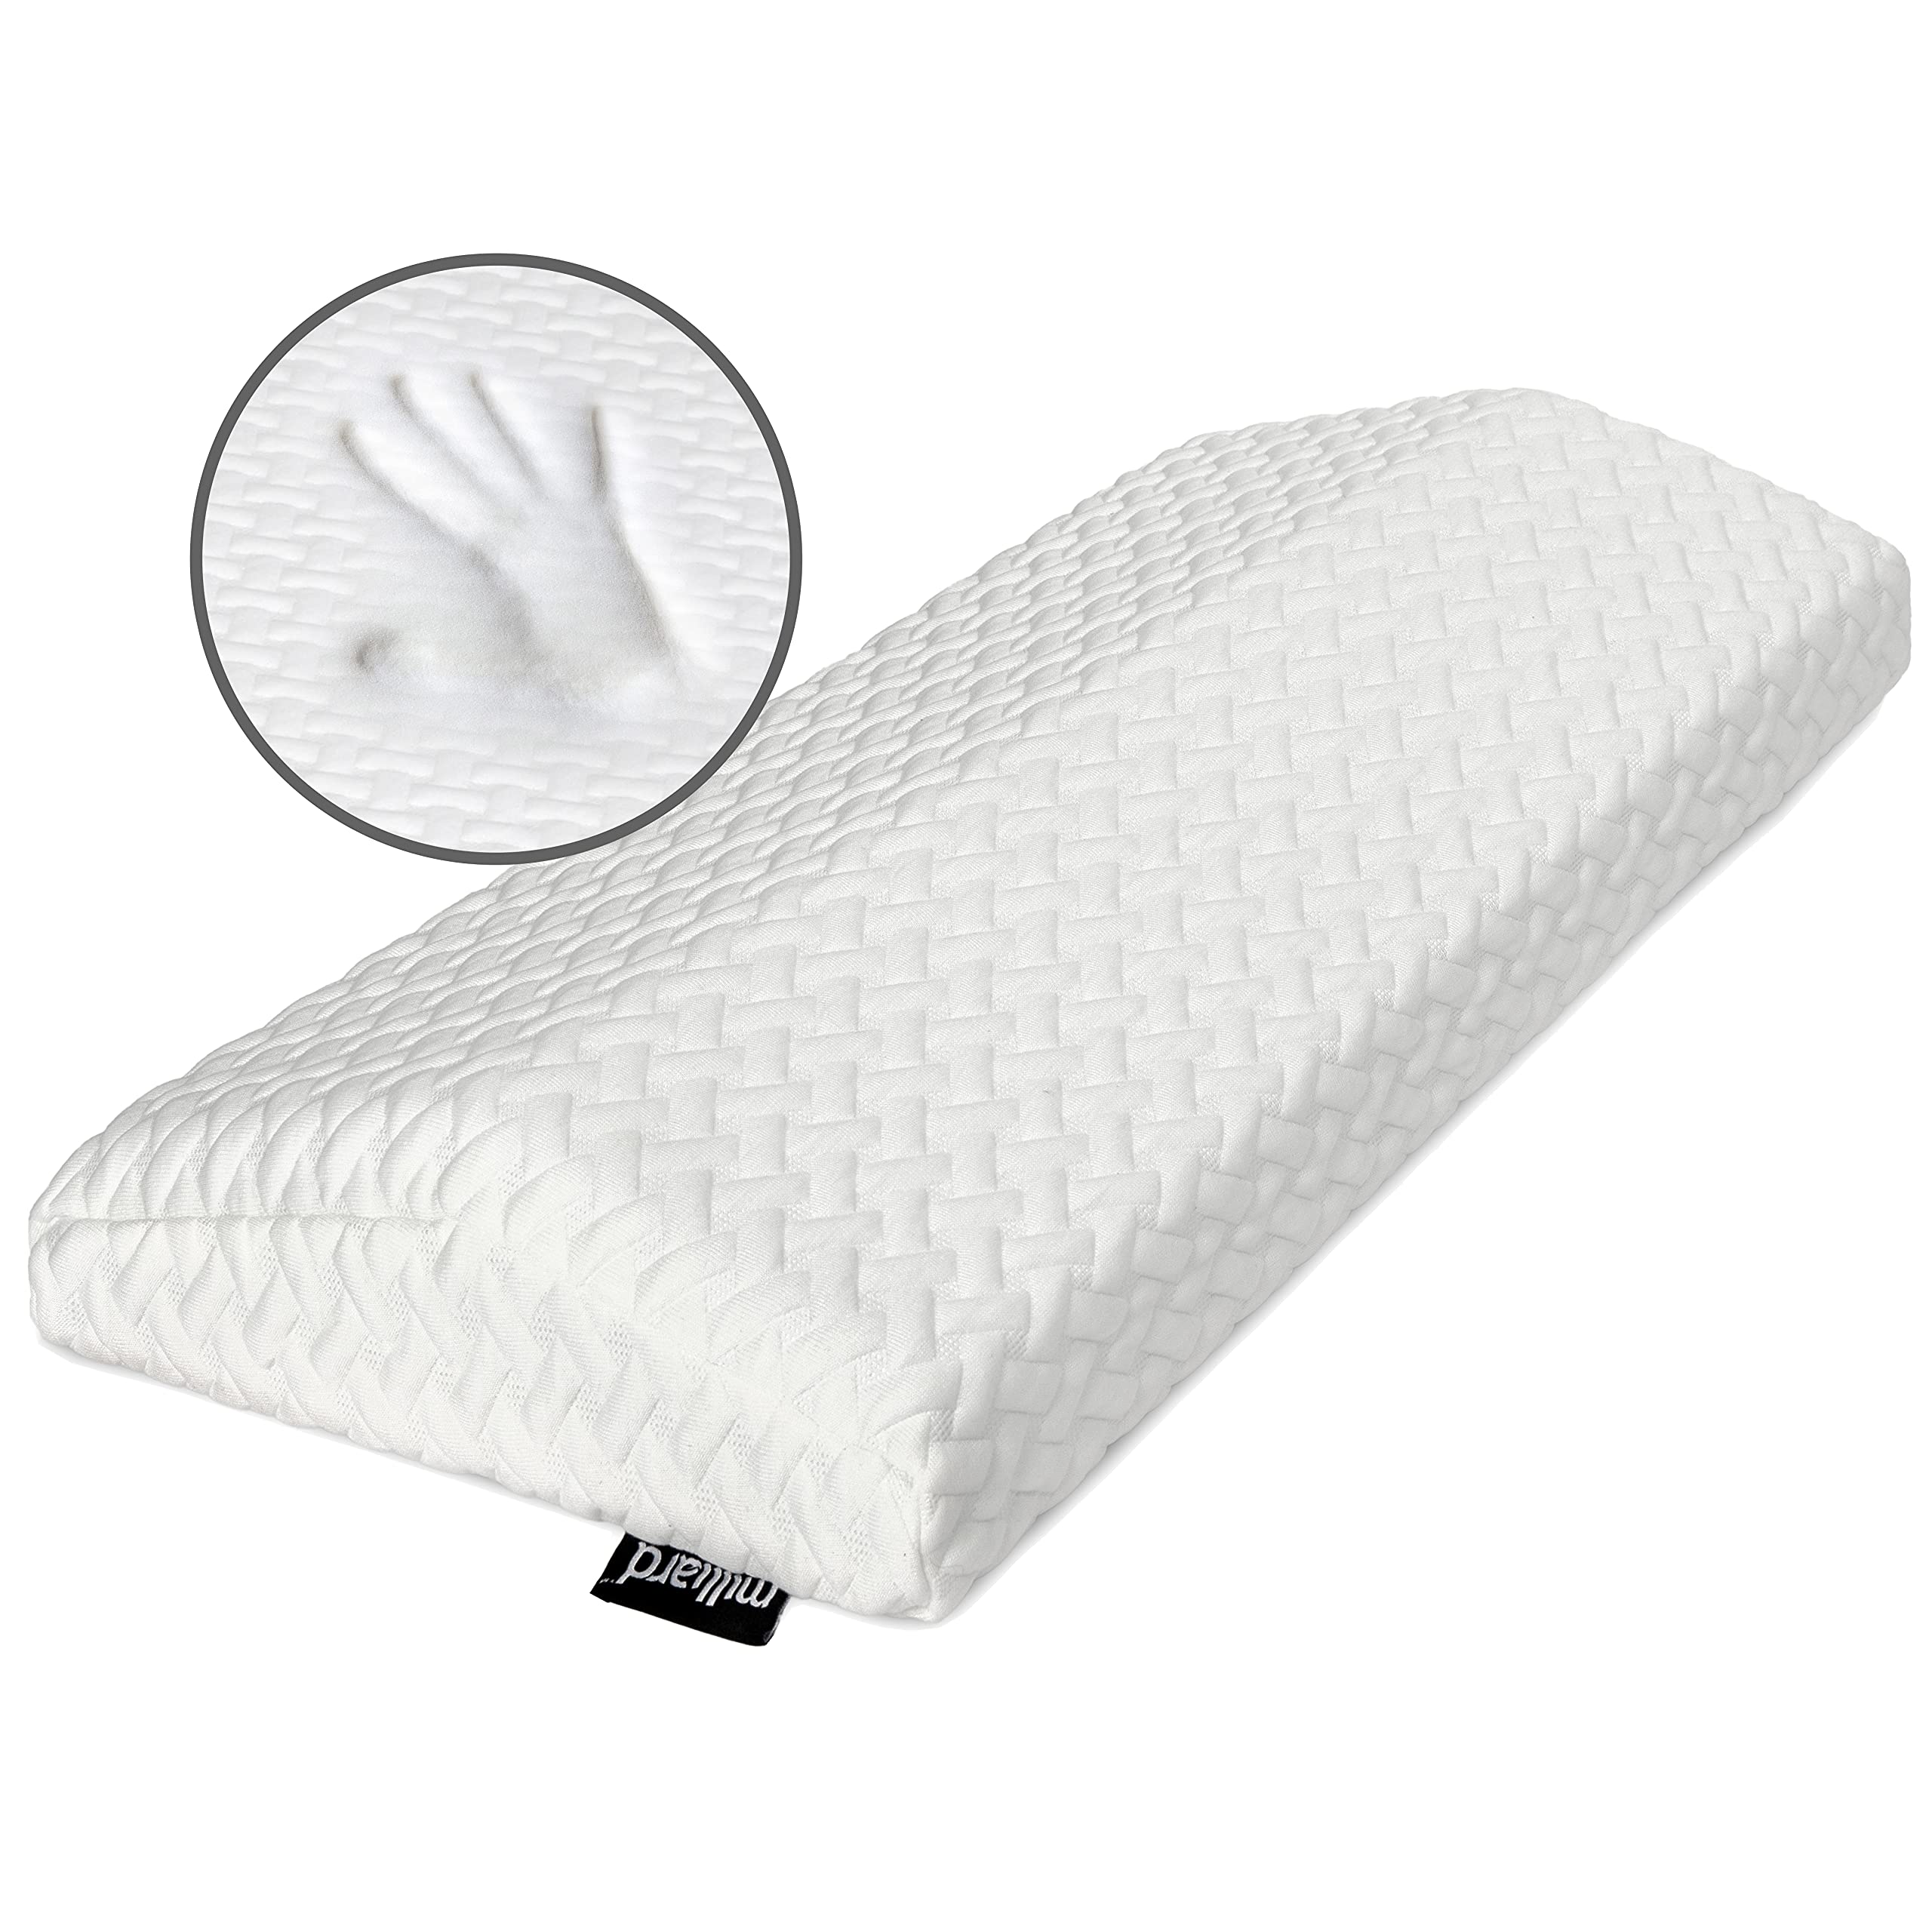 FOUSUPDT Lumbar Pillow, Memory Foam Lumbar Support Pillow for